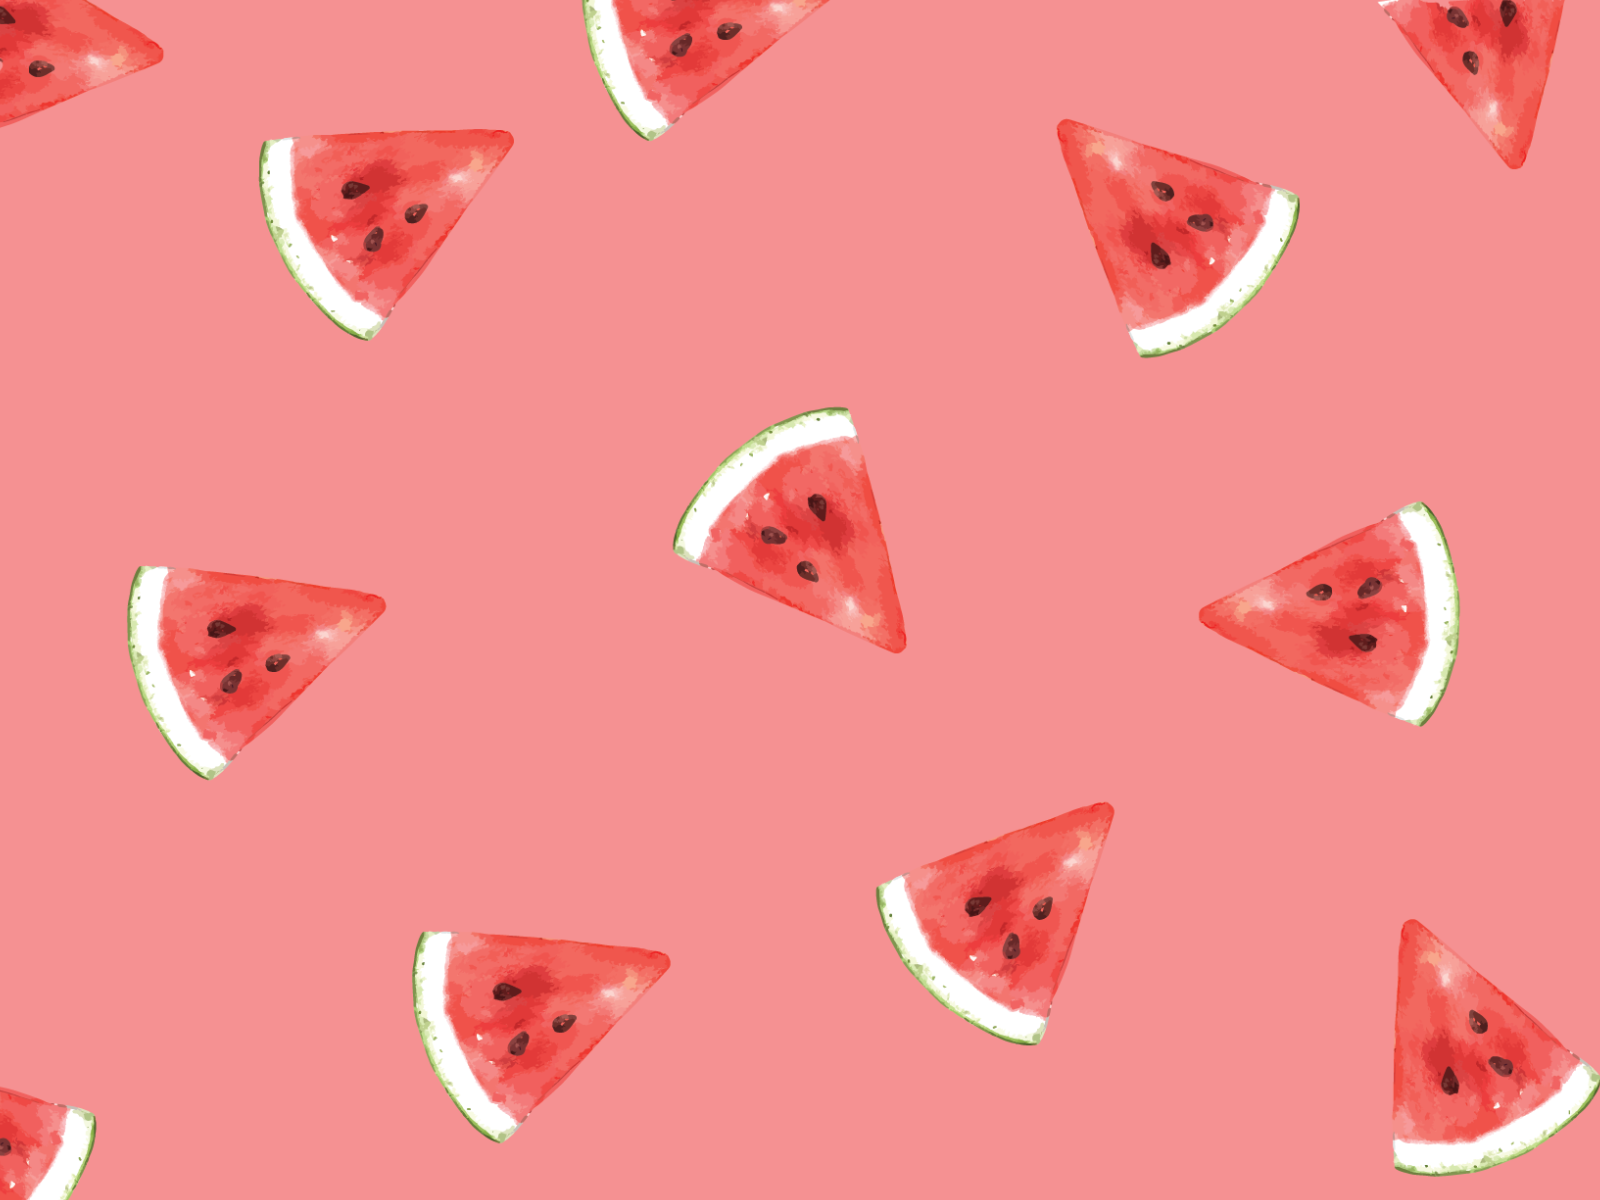 HD wallpaper Watermelon Slices background summer fruits  Wallpaper Flare